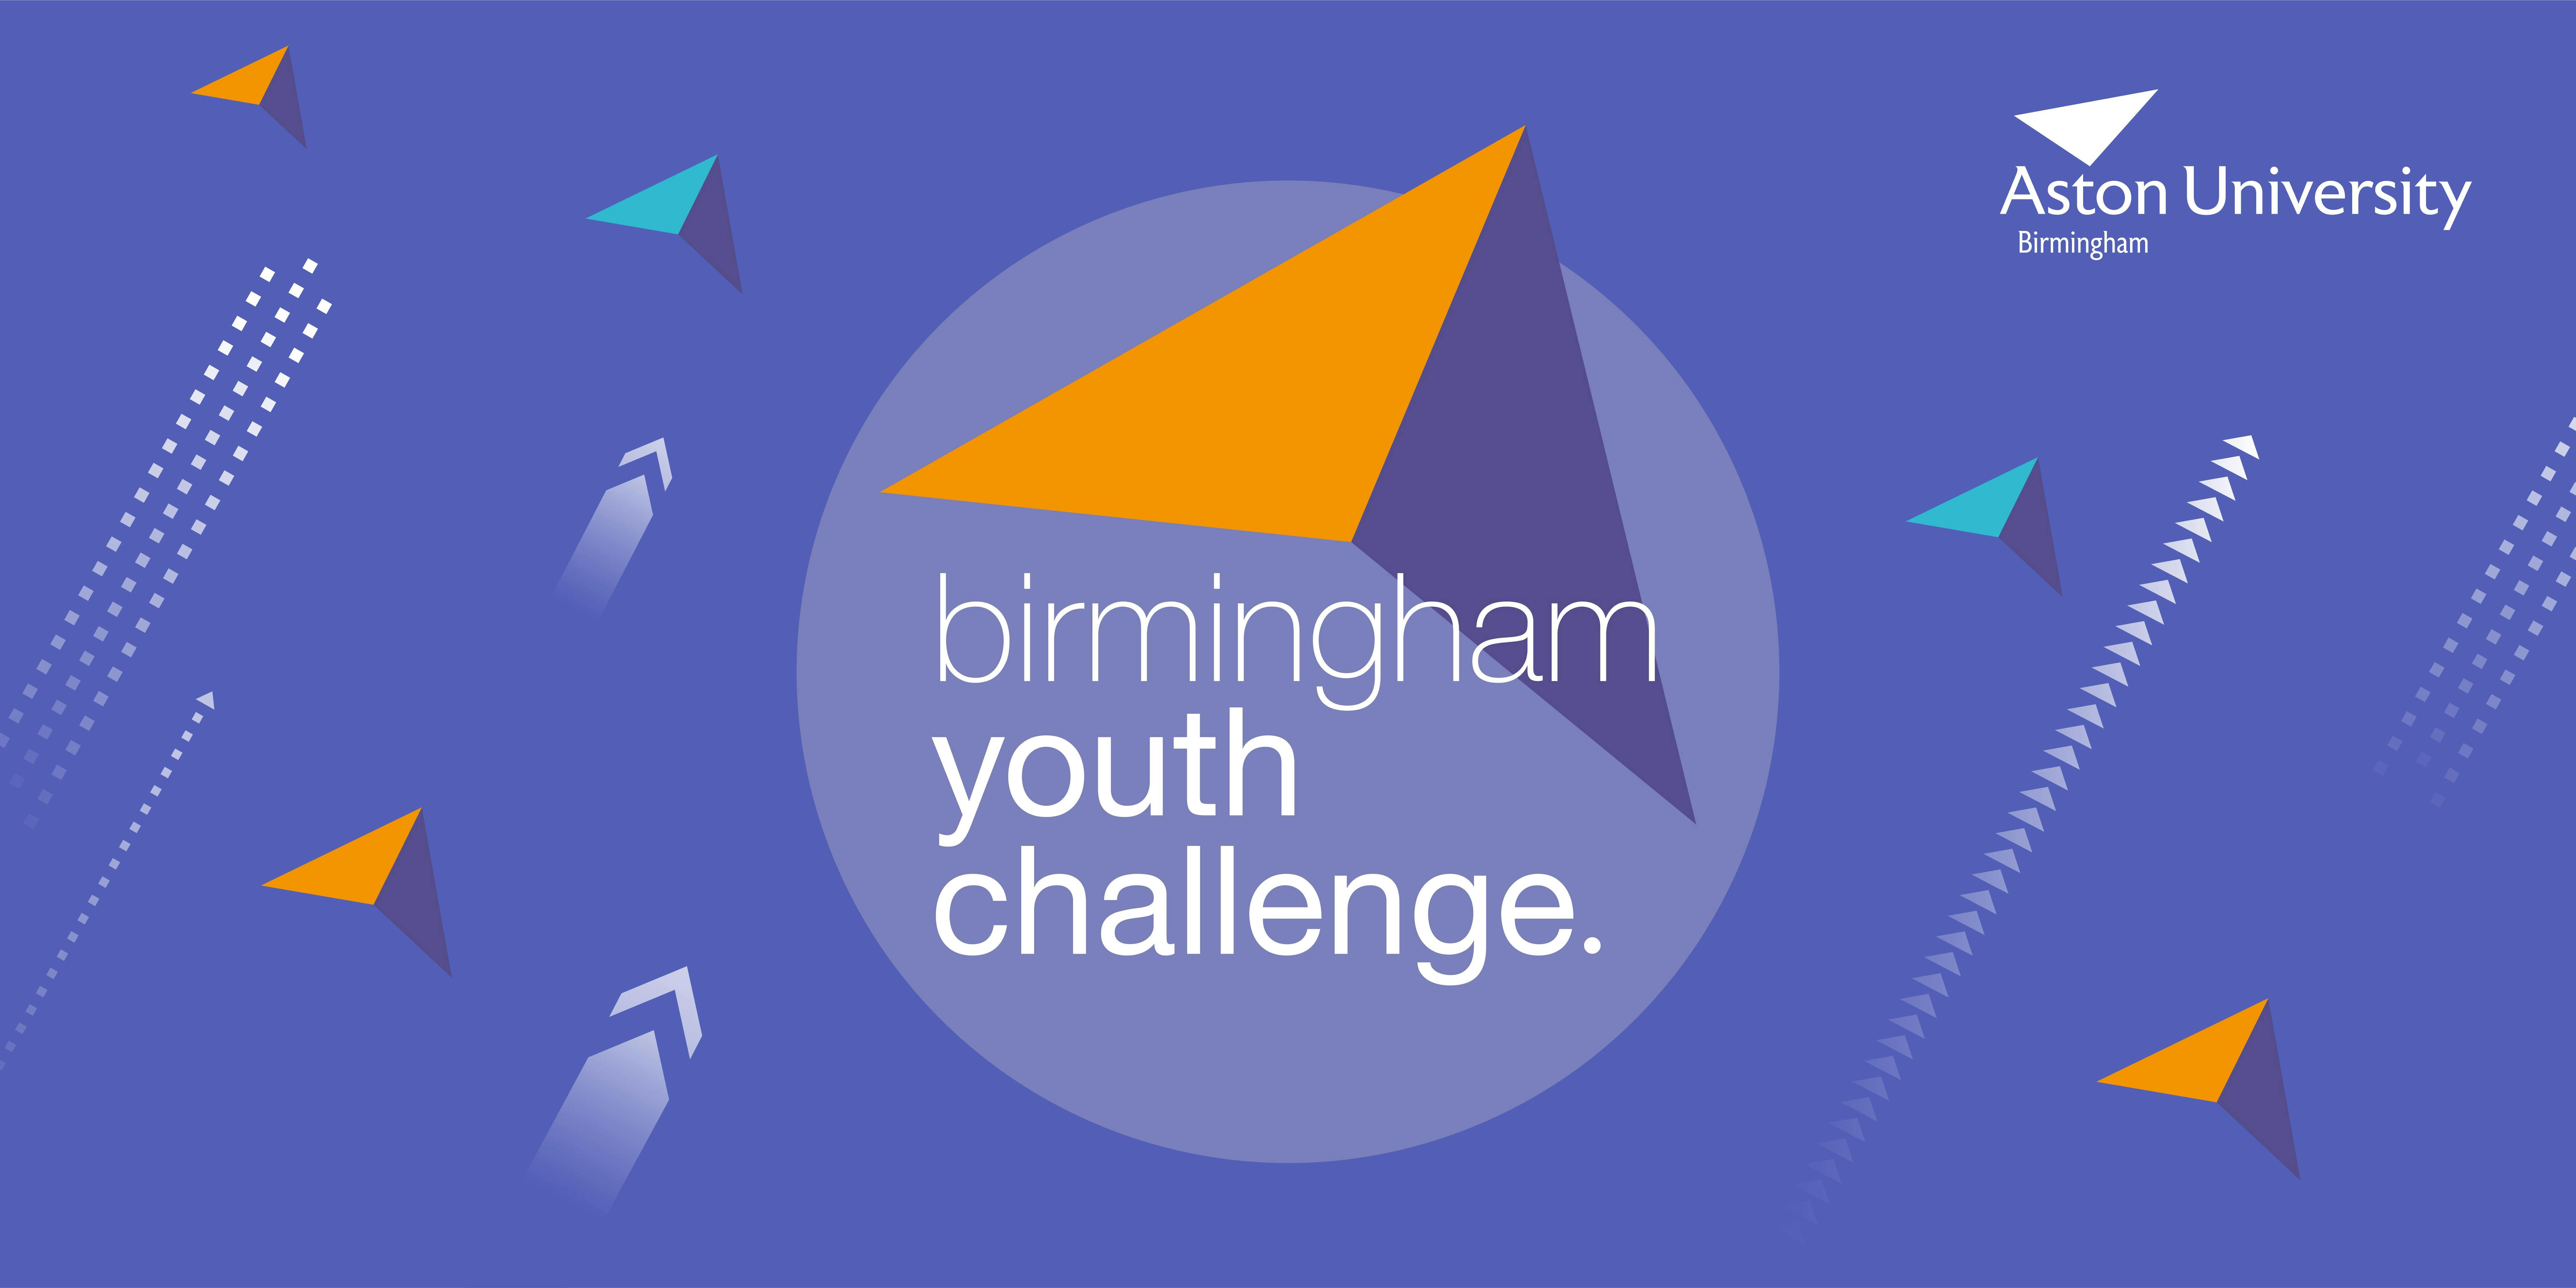 The Birmingham Youth Challenge